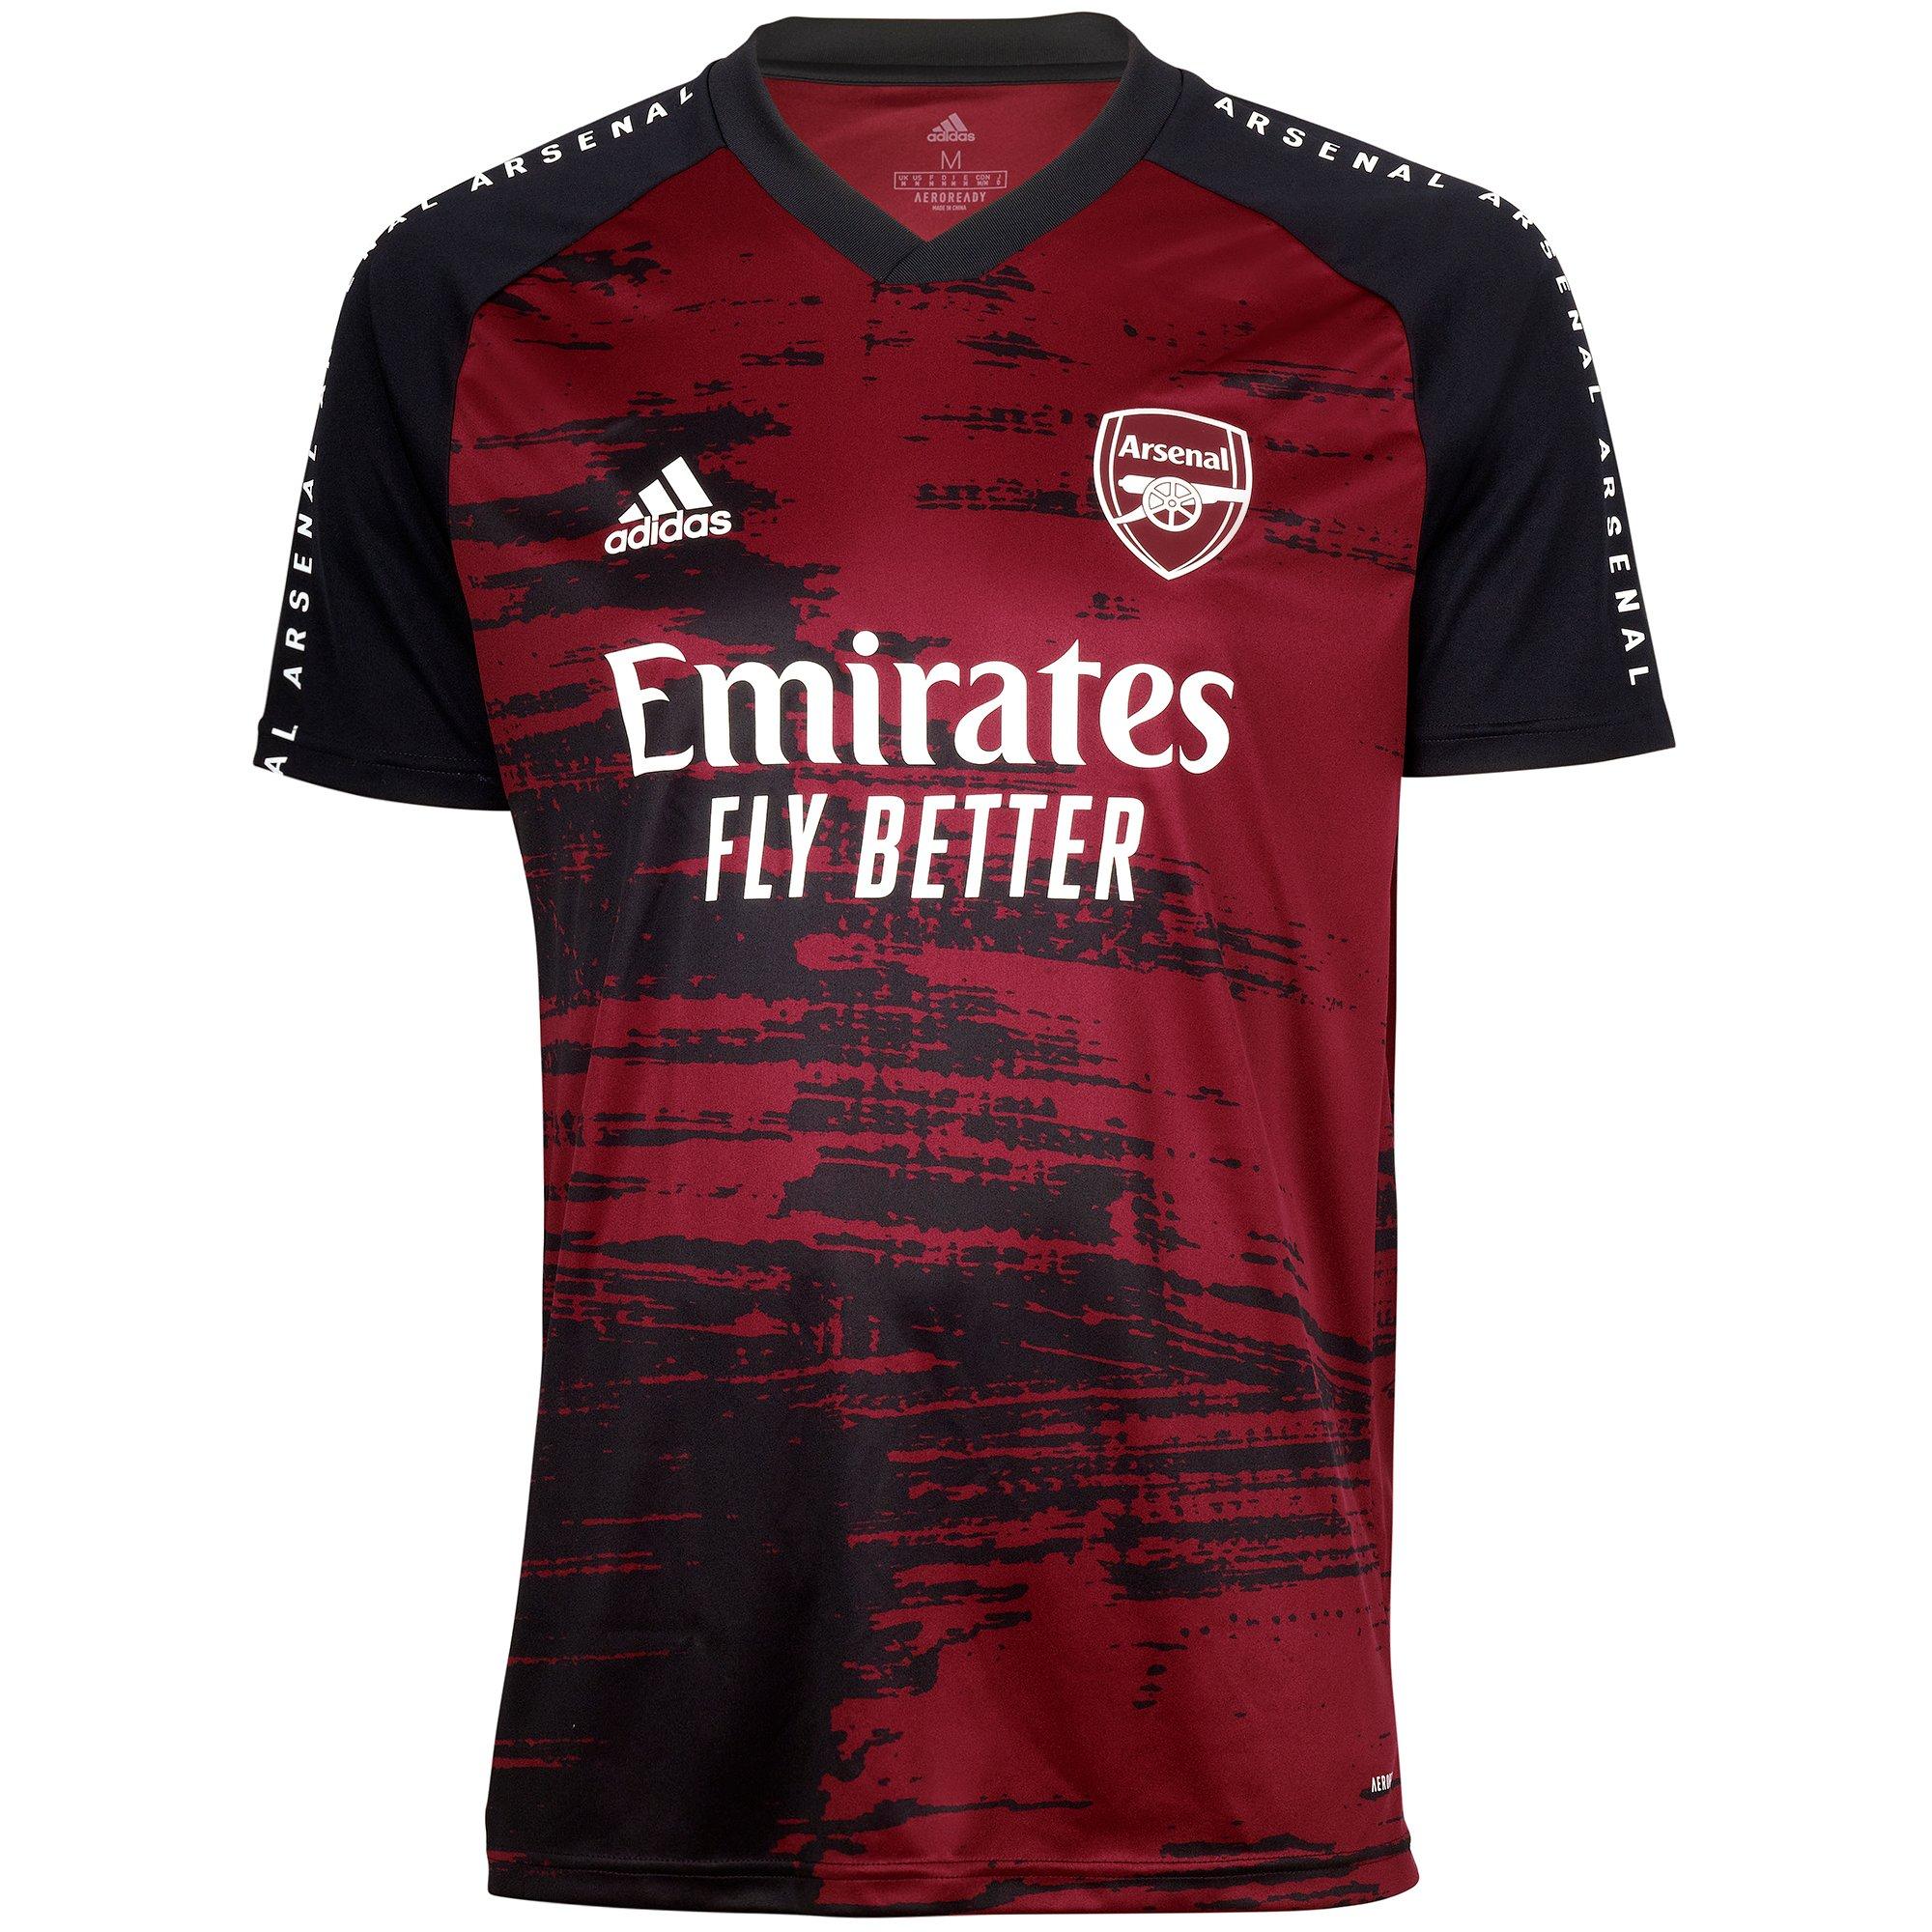 The Arsenal 20/21 Training Wear 